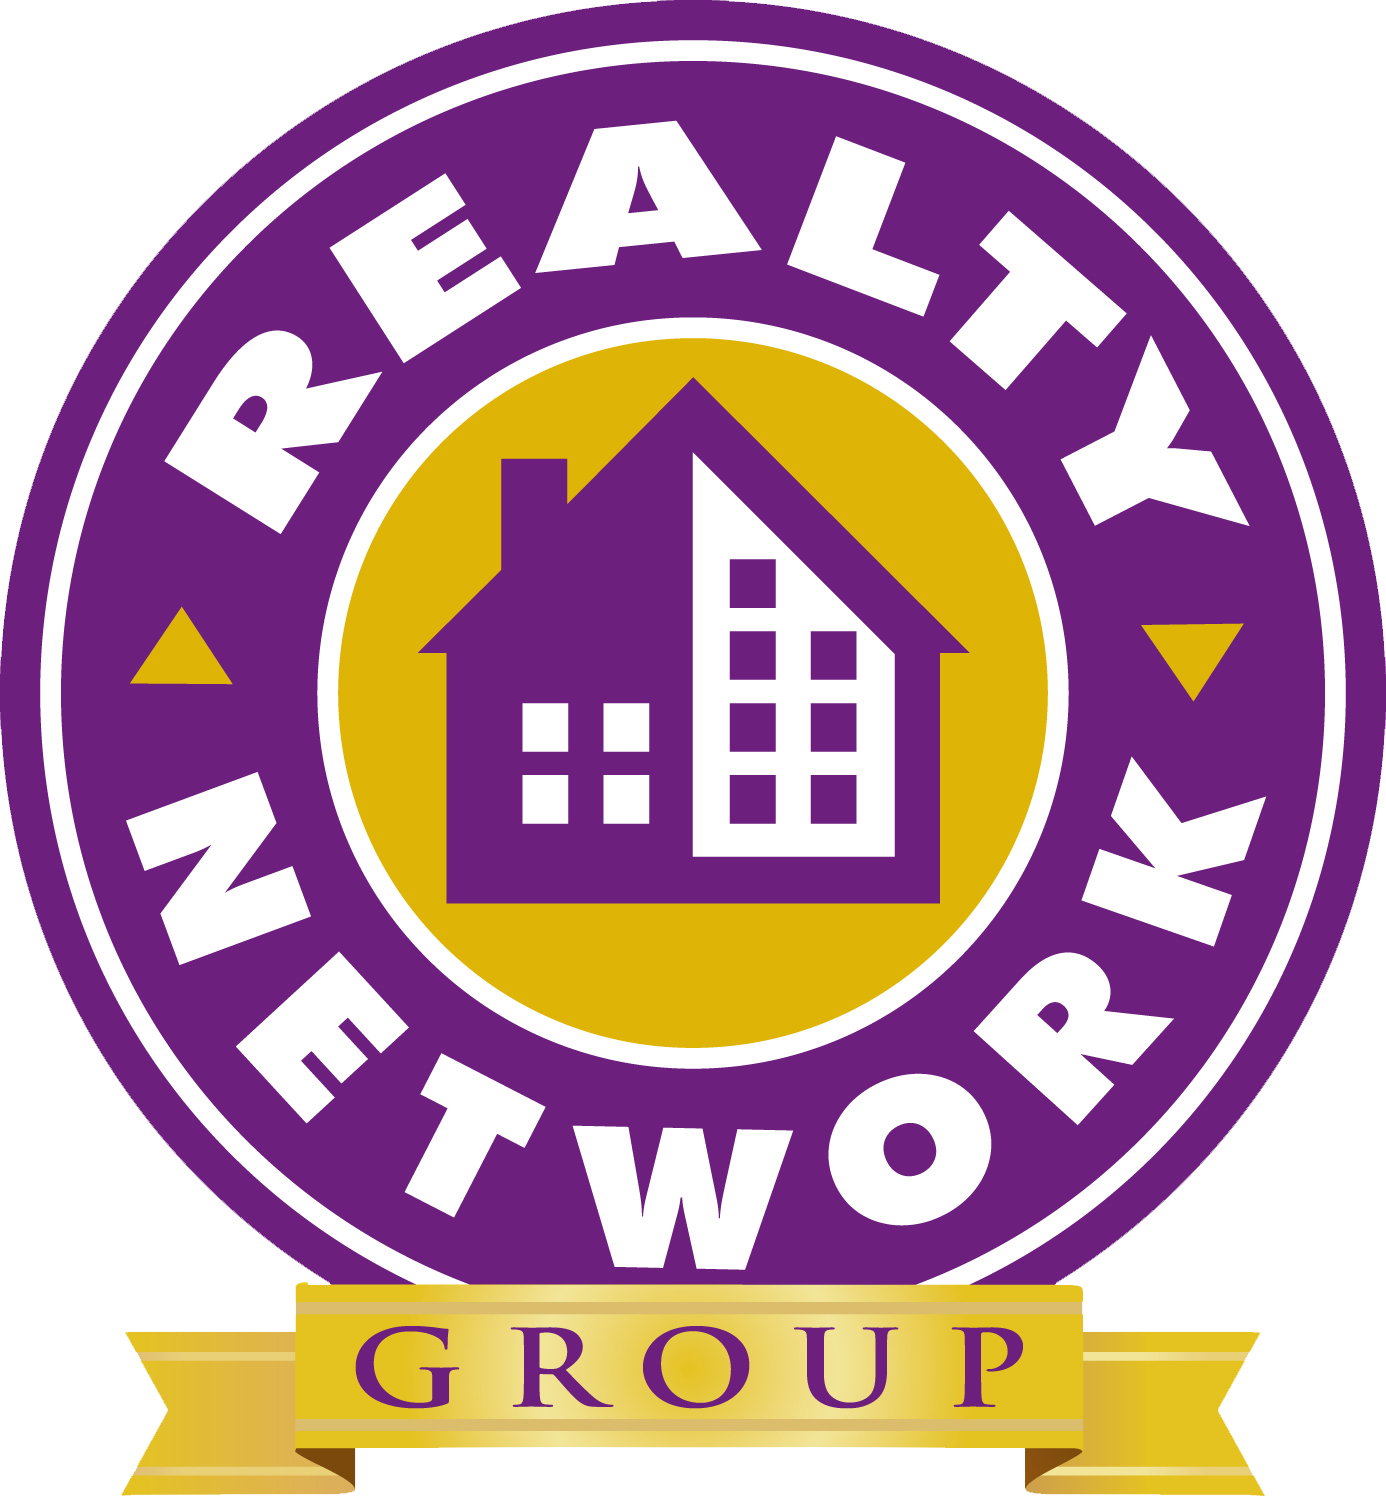 Pin Group / агентство недвижимости. Realty. Central partnership logo. Realtor networking.